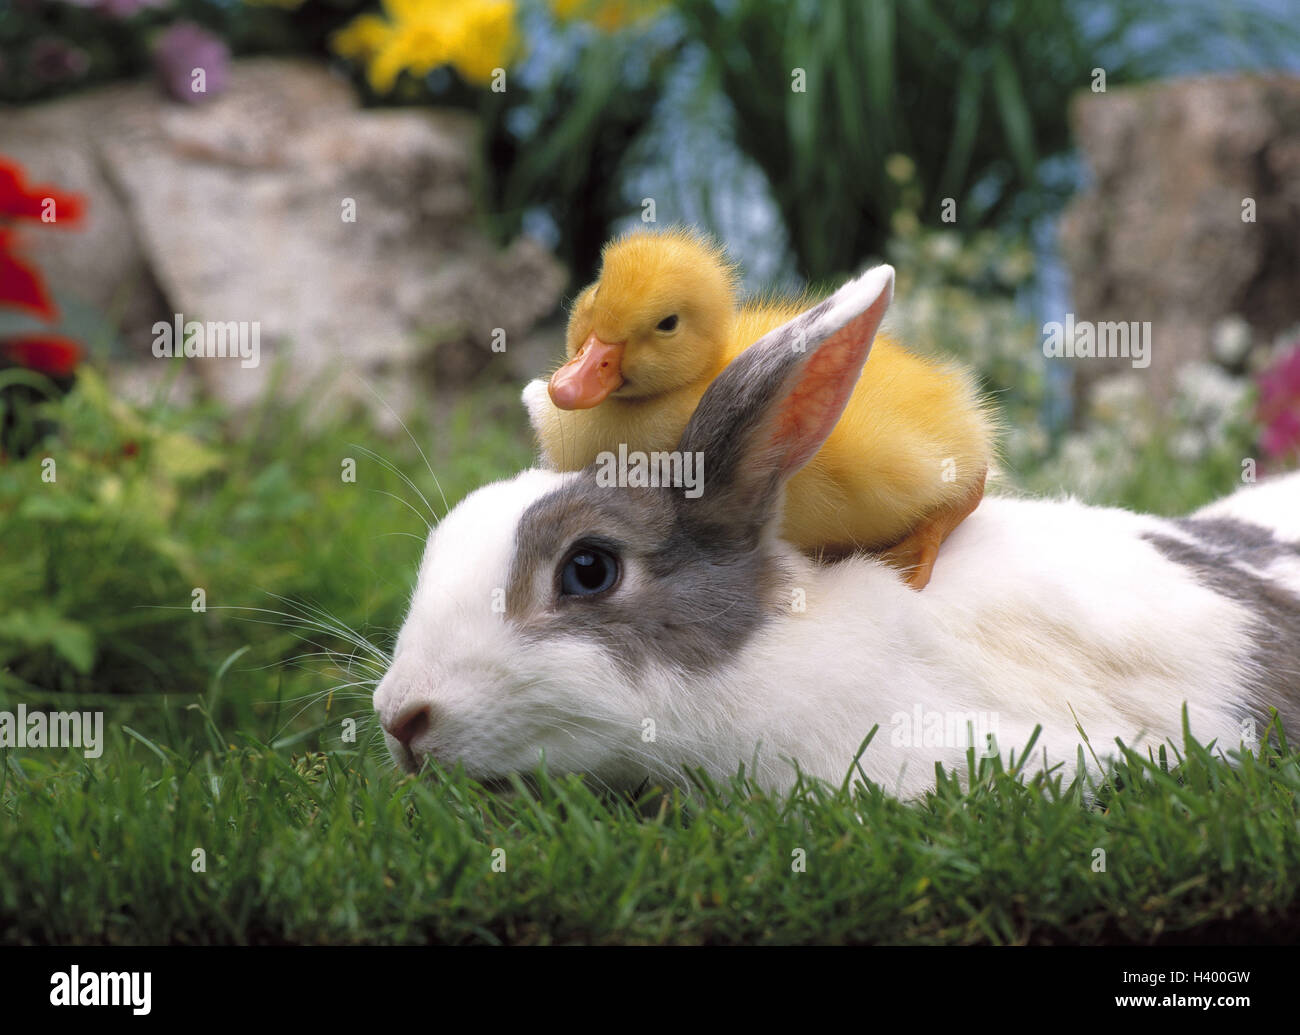 Ducklings, rabbits, grass, animal, chick, hare, spring, garden, animal friendship, Easter, Stock Photo